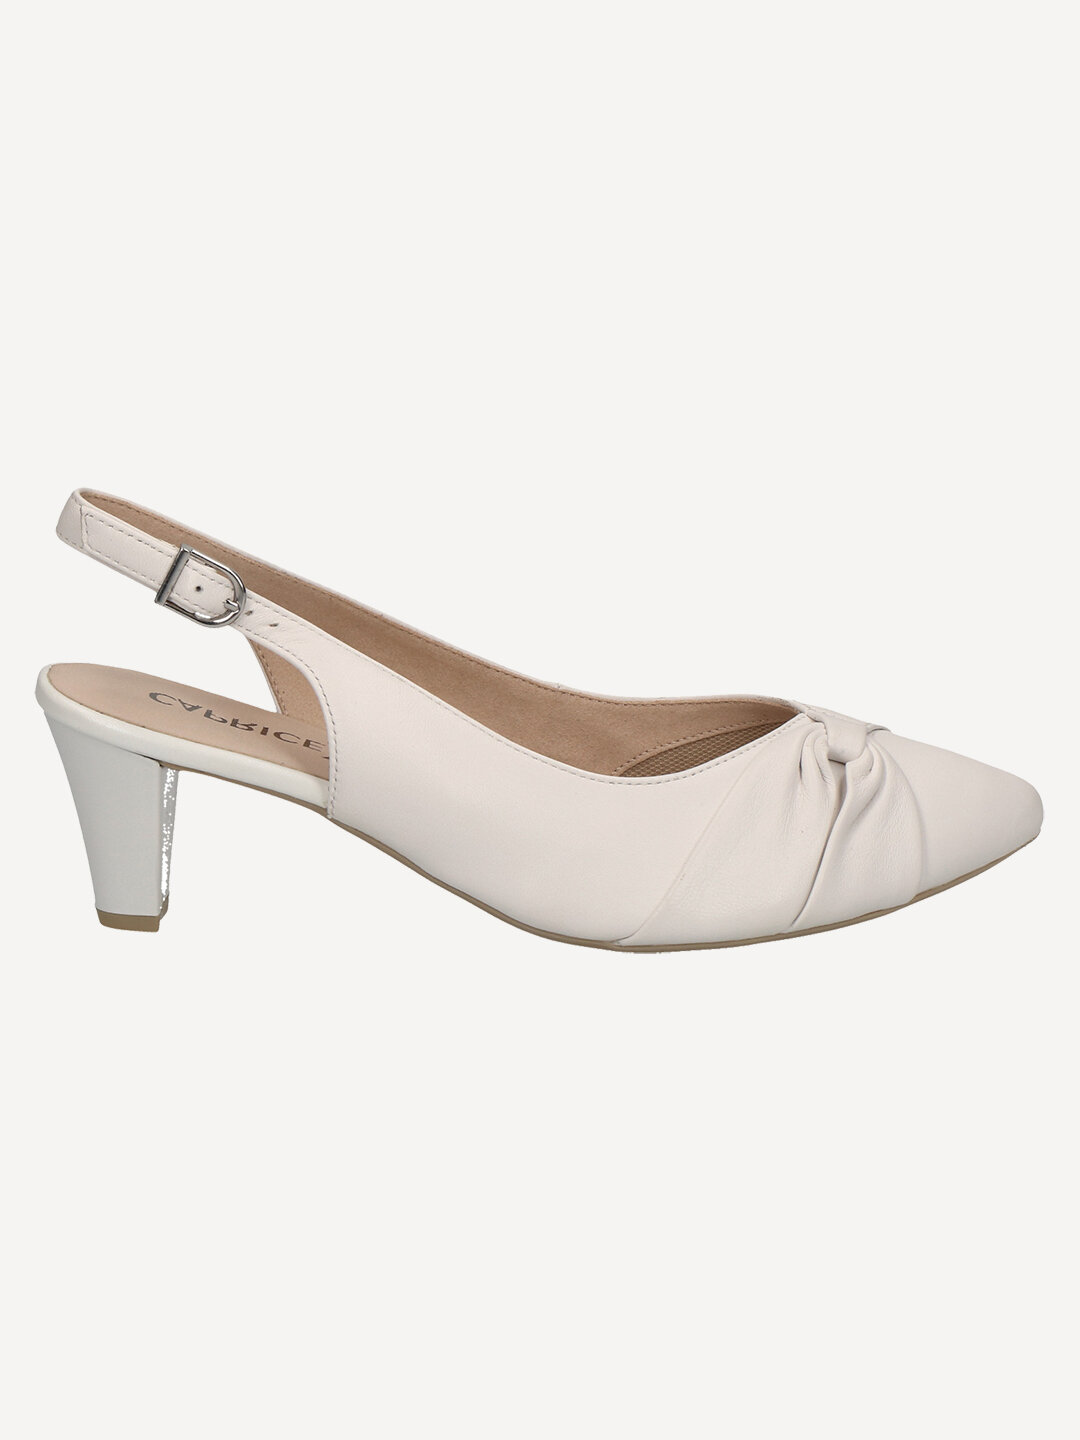 Туфли женские Caprice 2962020139 белые 37.5 RU